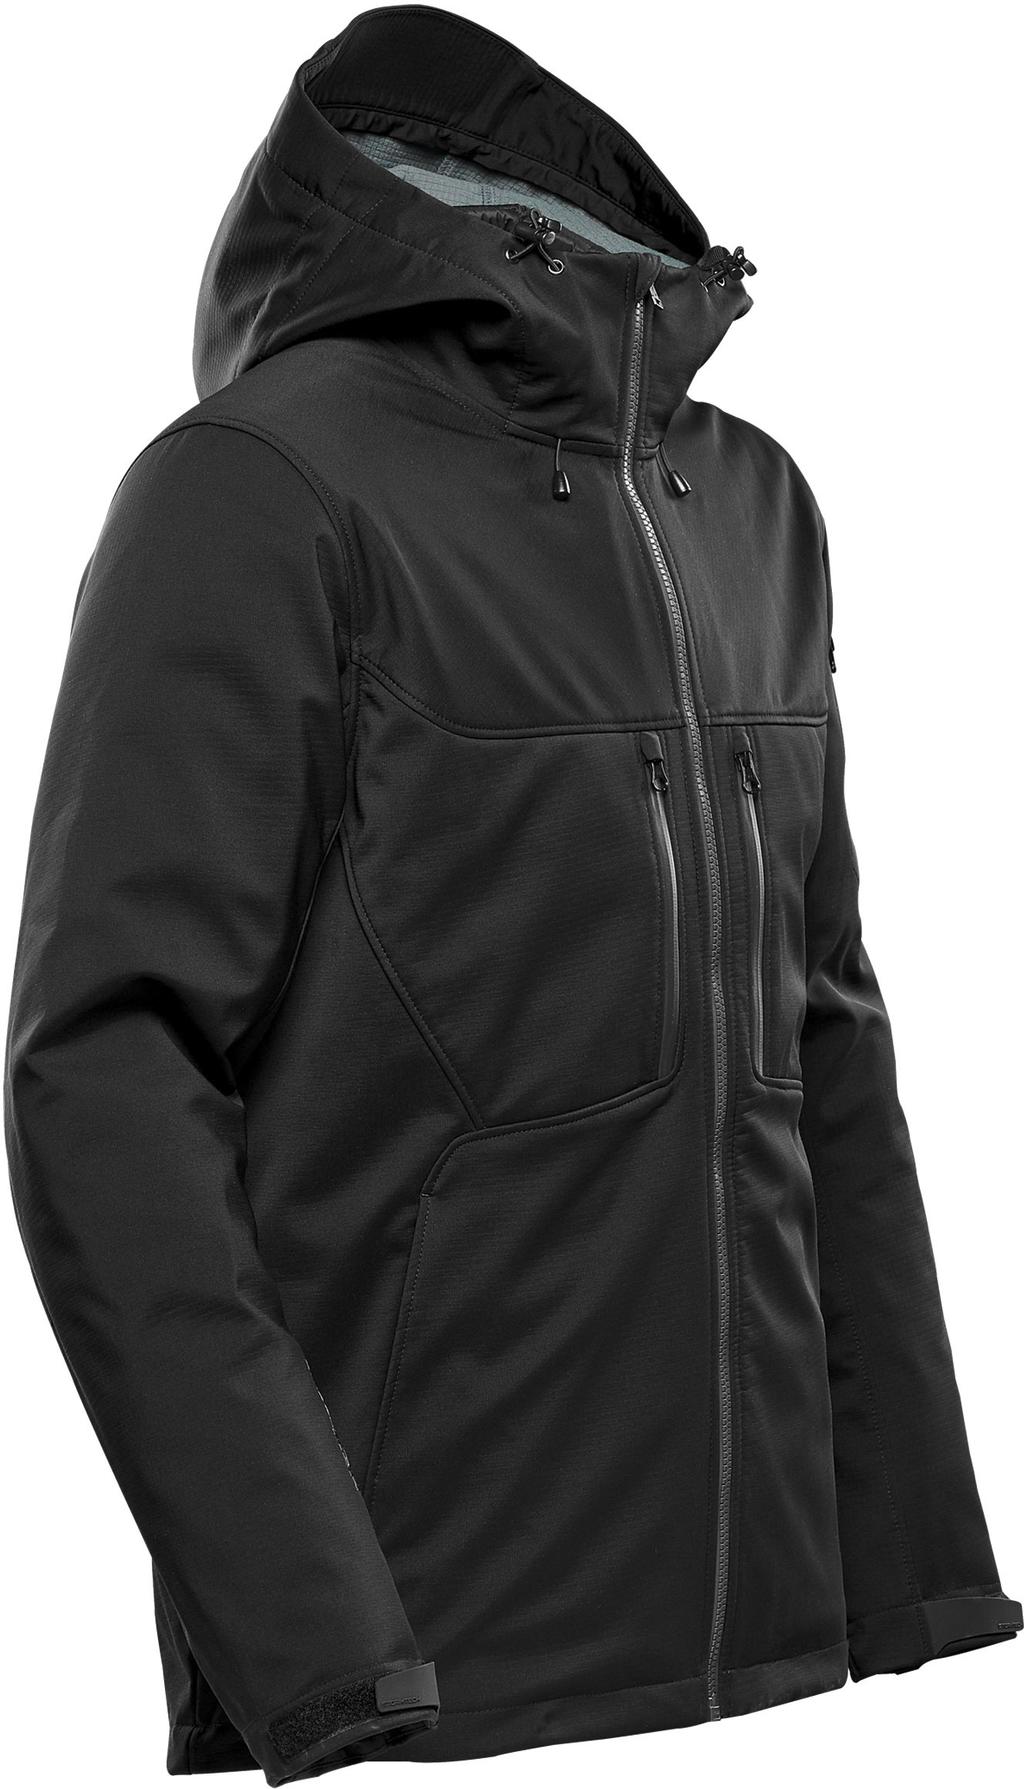  Epsilon System Jacket in Farbe Black